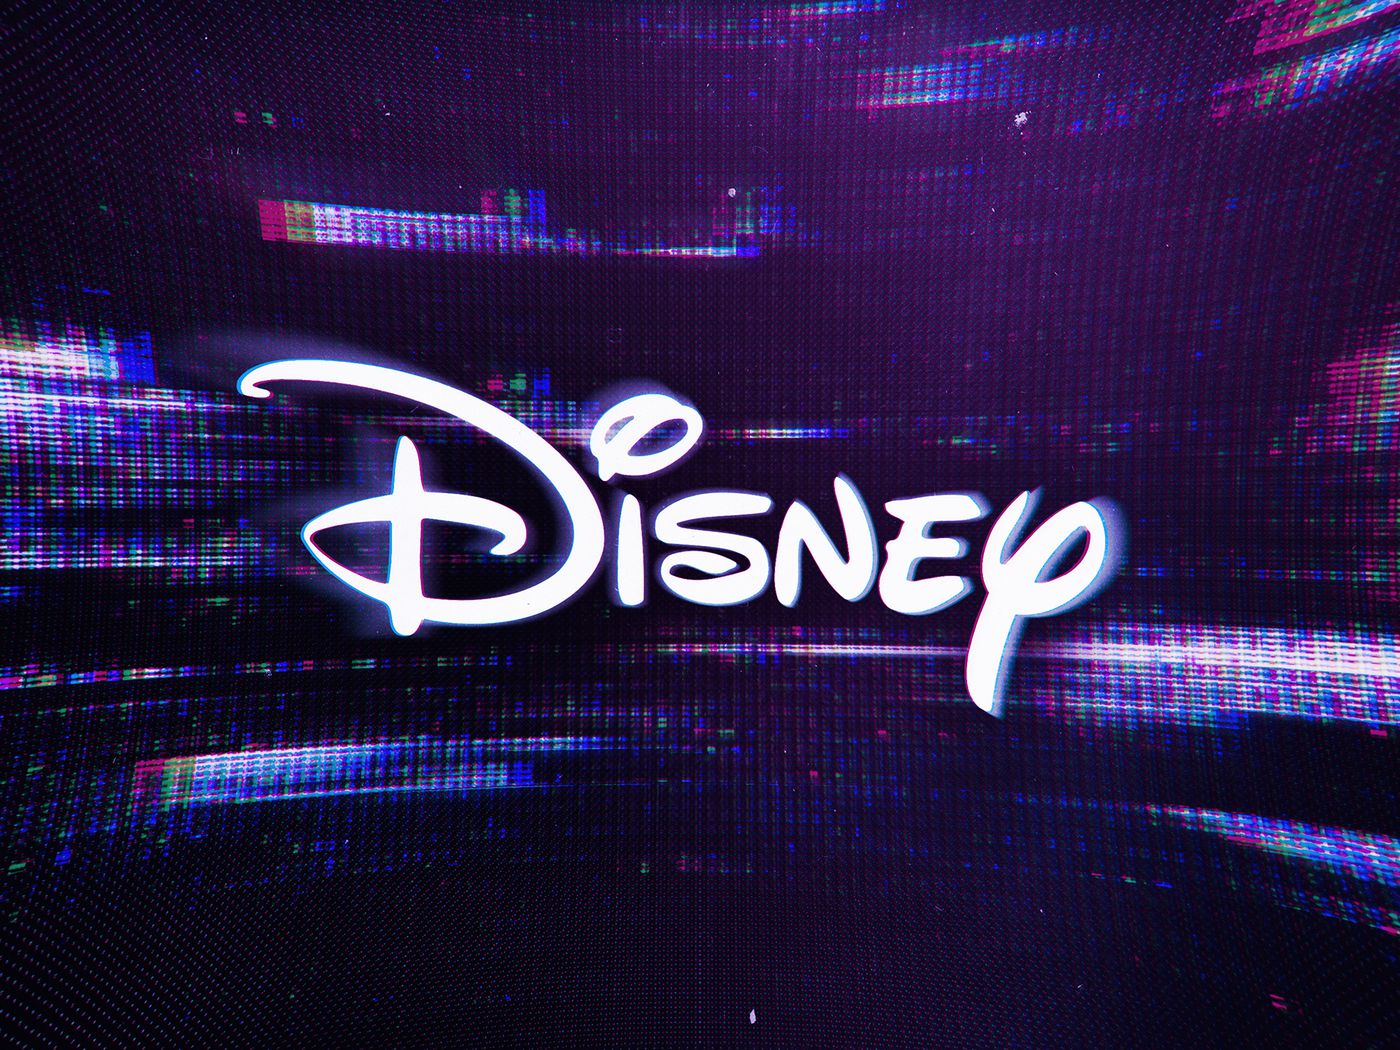 Disney Plus' Premium streaming price is rising to $10.99 per month